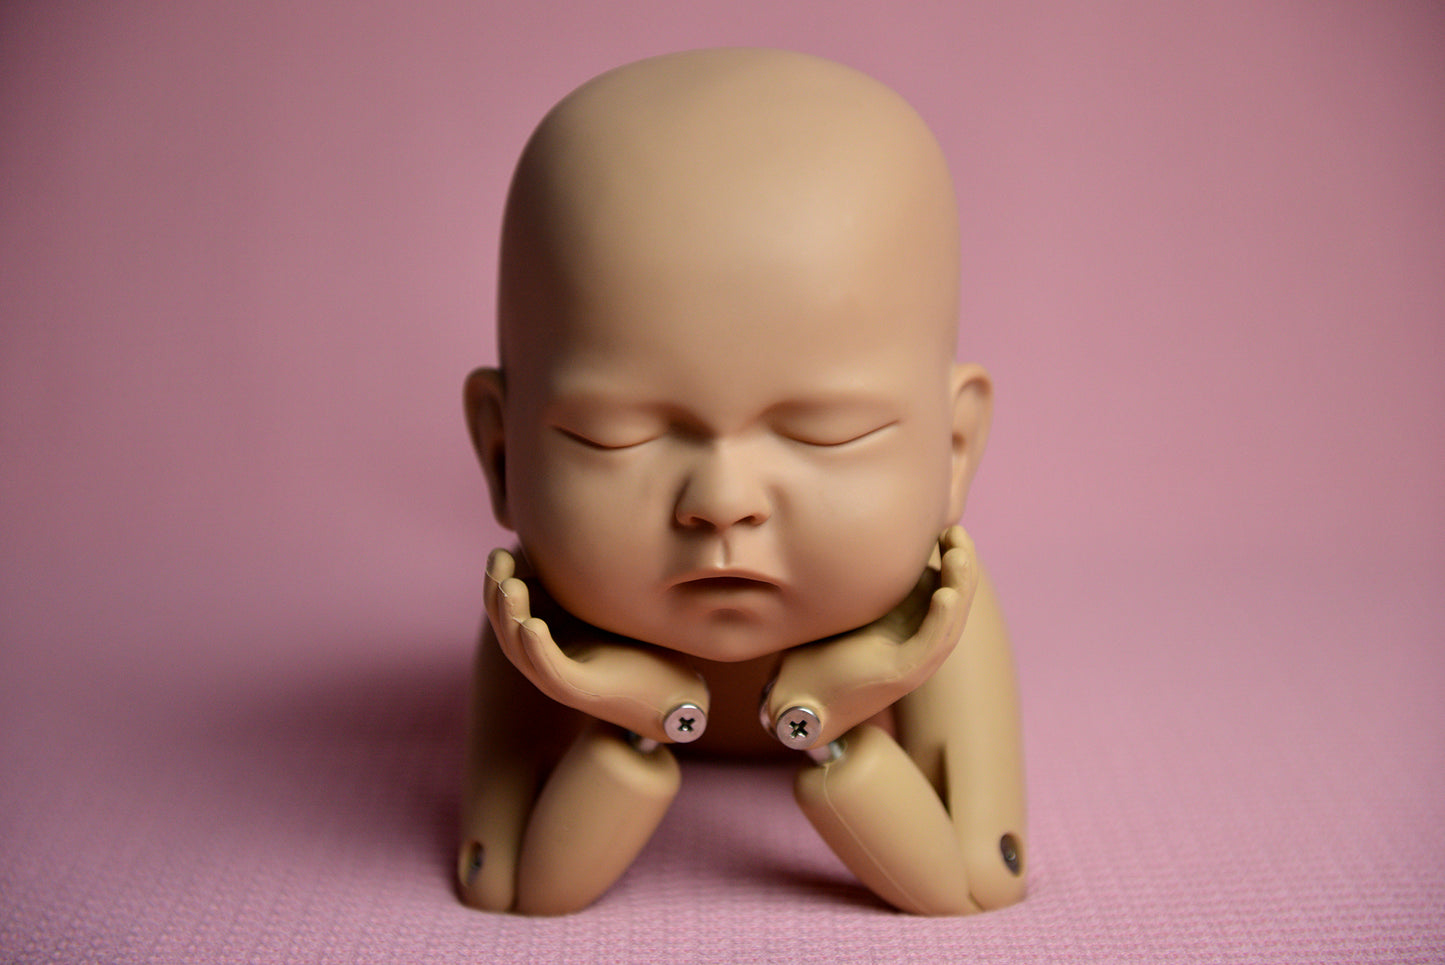 Bean Bag Fabric - Perforated - Light Pink-Newborn Photography Props